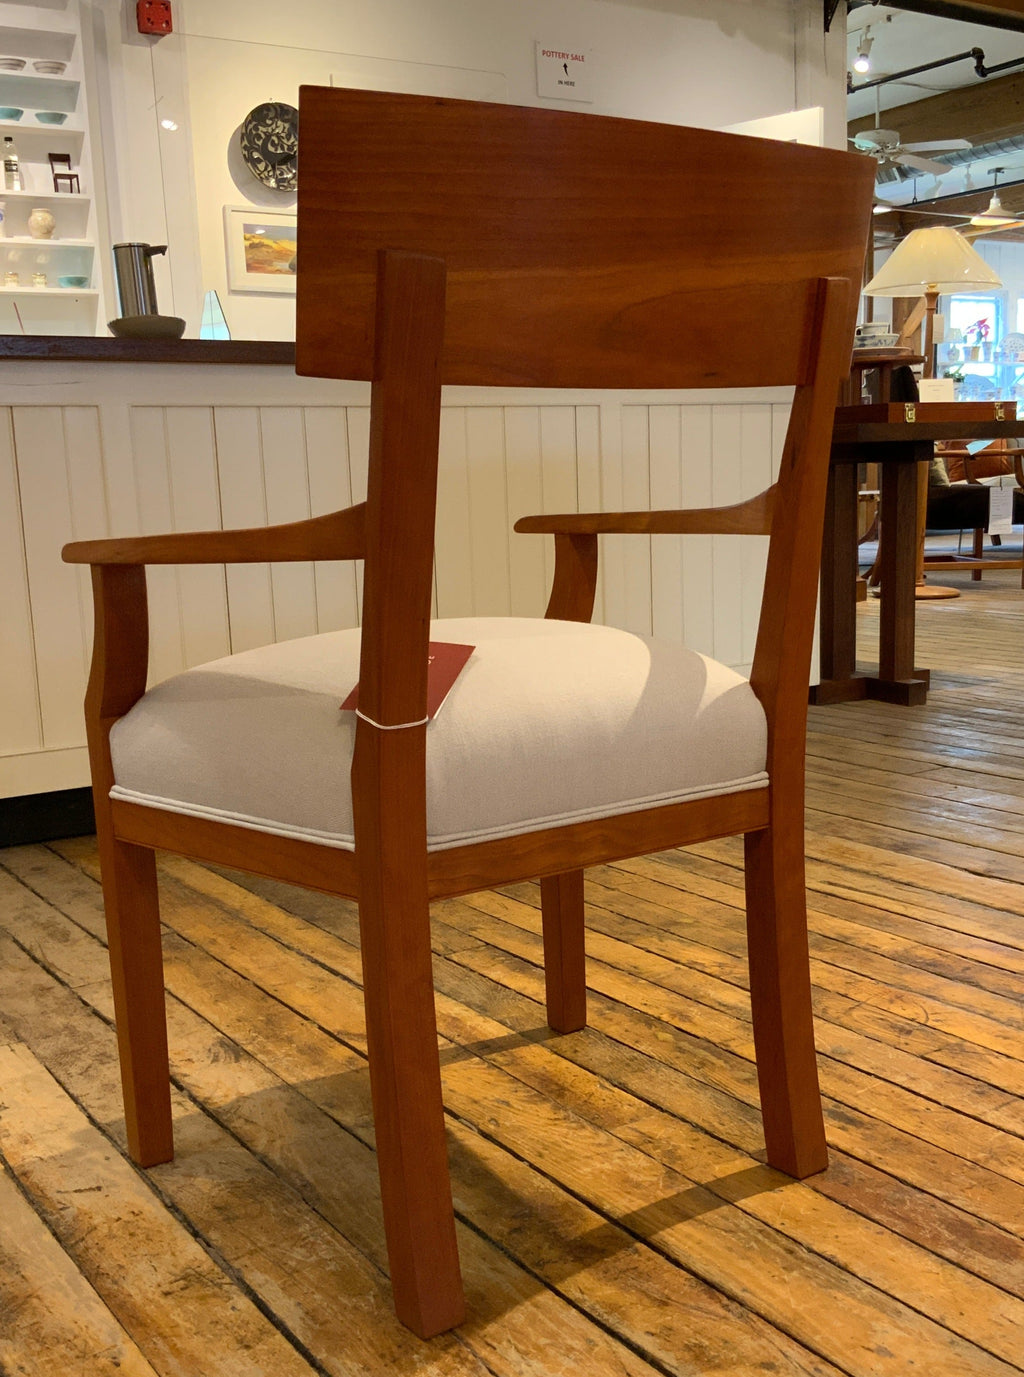 Ricardo Arm Chair in Cherry